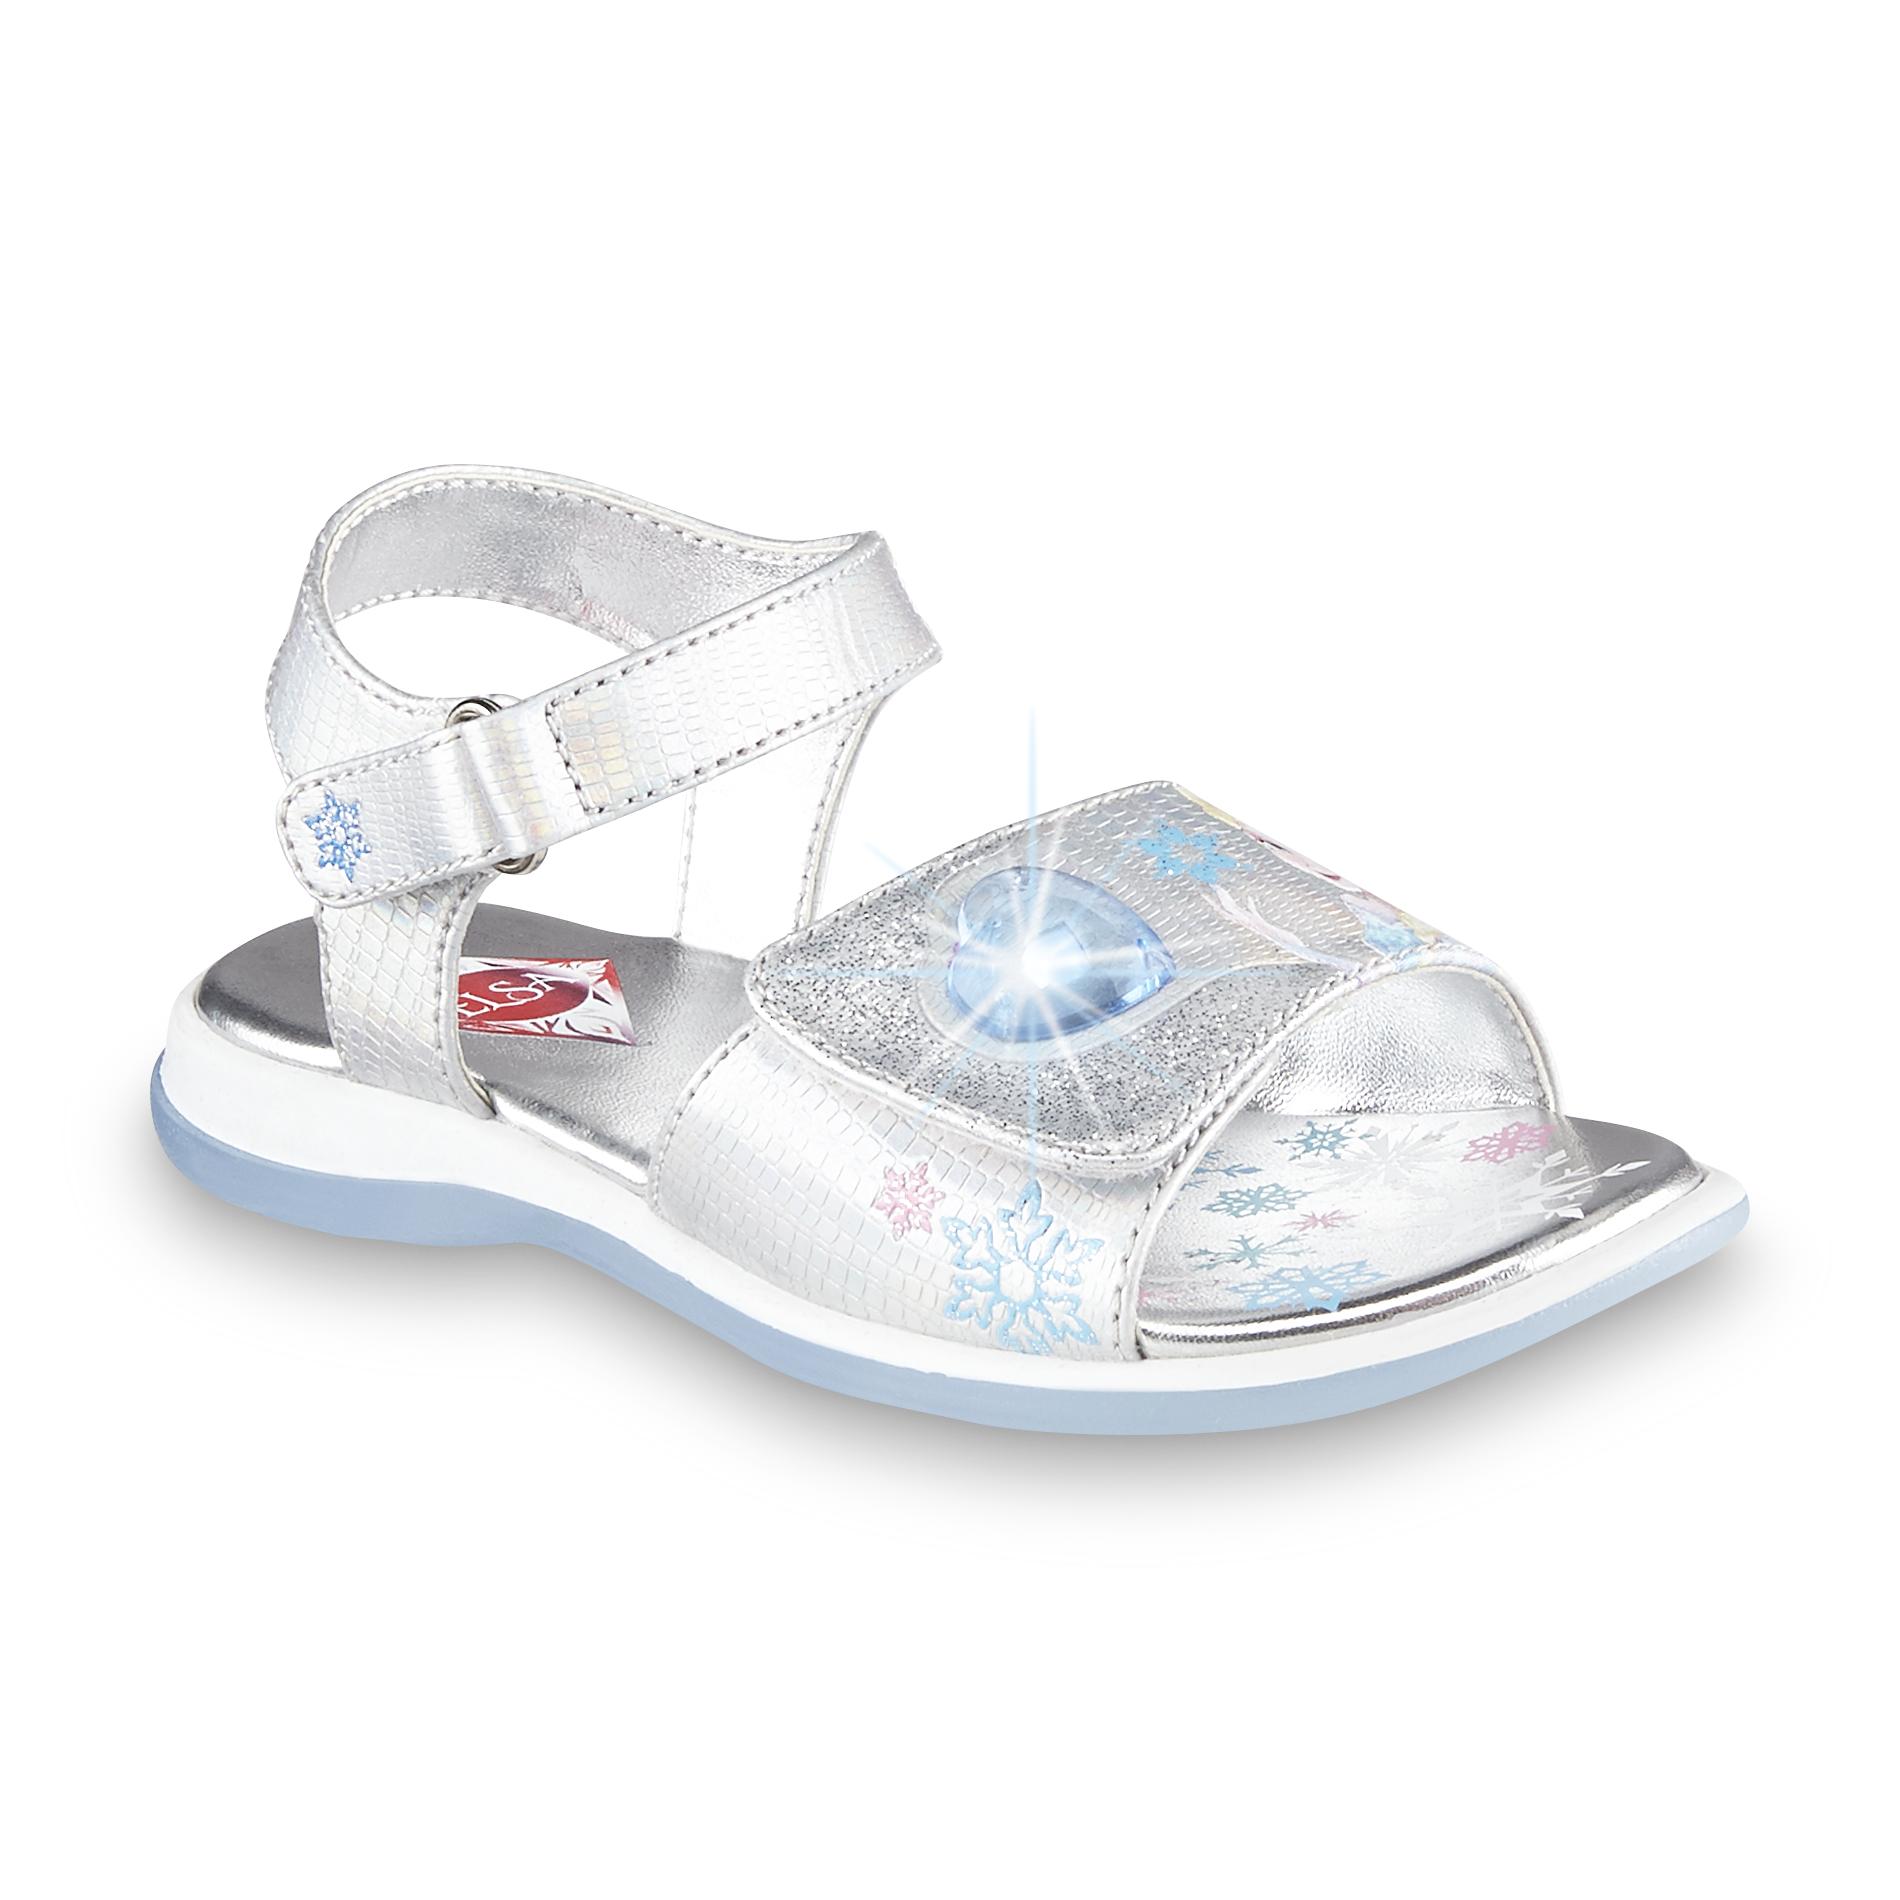 Disney Frozen Girl's Silver LightUp Sandal Shoes Baby